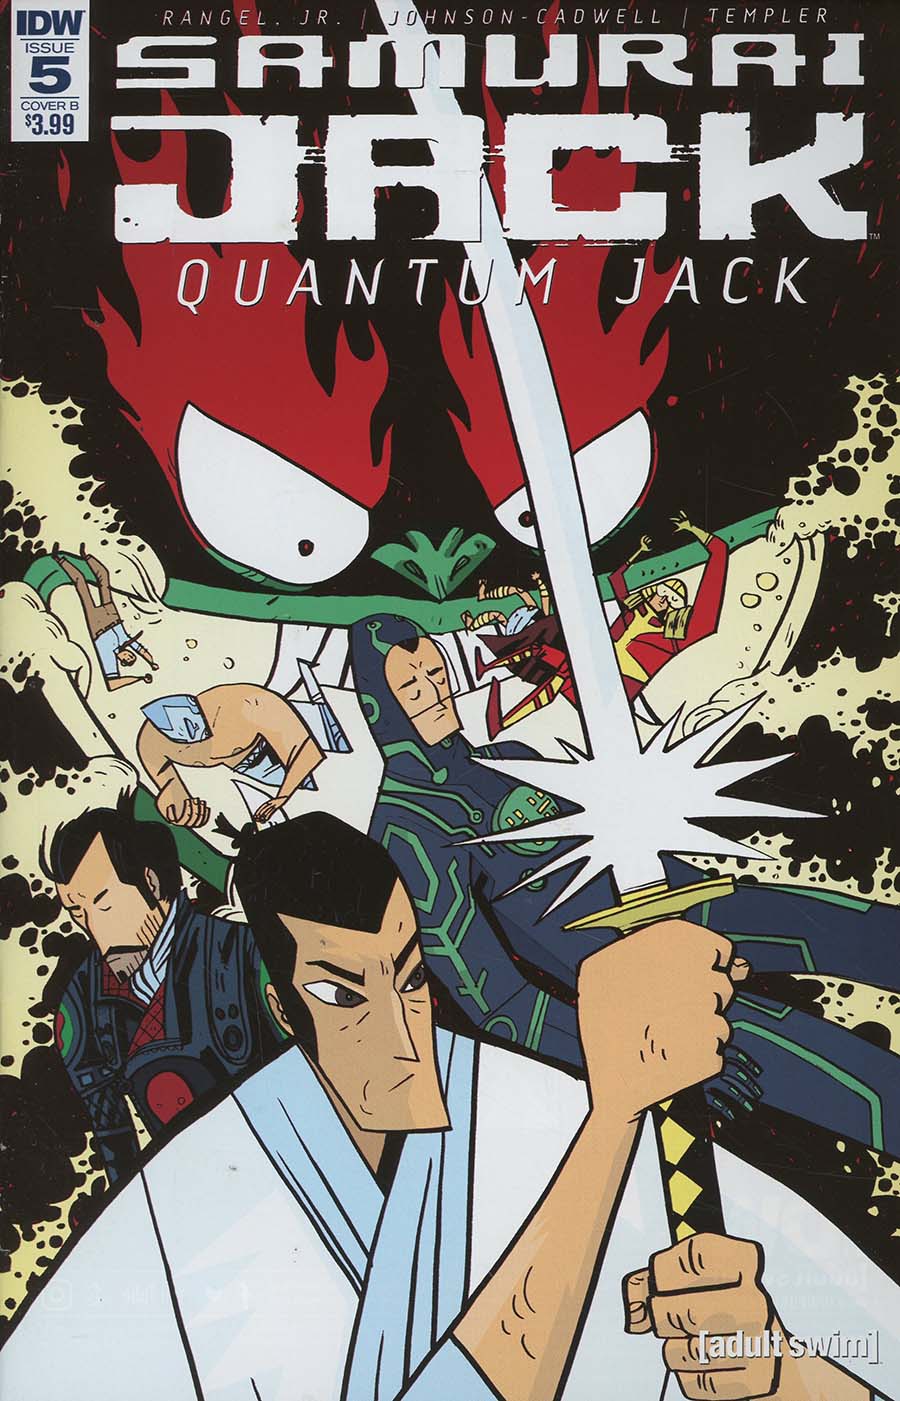 Samurai Jack Quantum Jack #5 Cover B Variant Warwick Johnson-Cadwell Cover